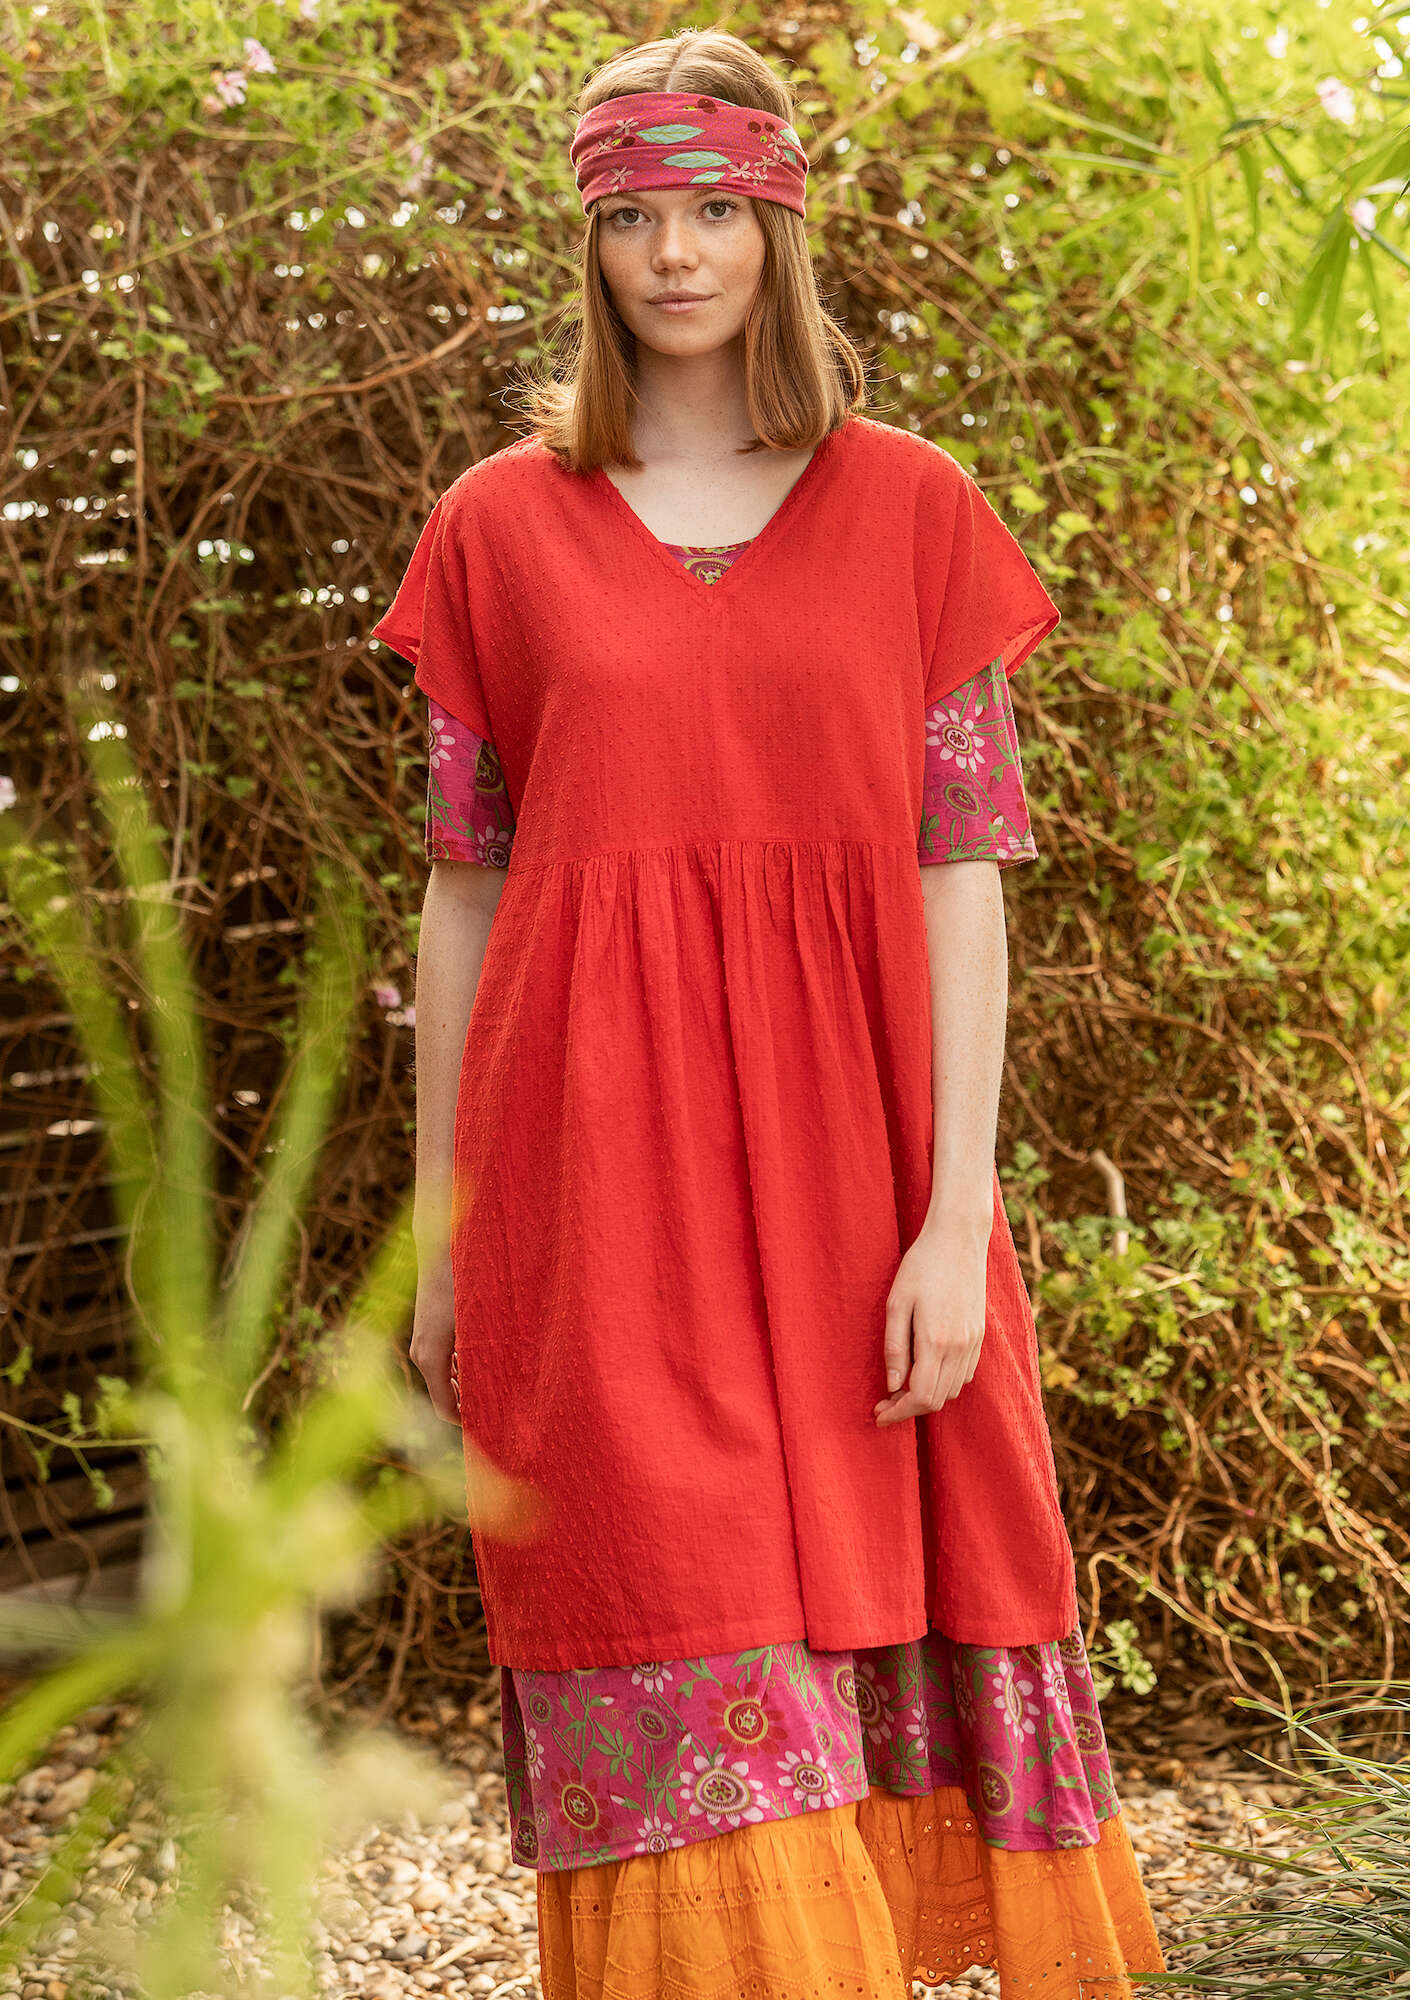 Woven dress in organic cotton wild strawberry